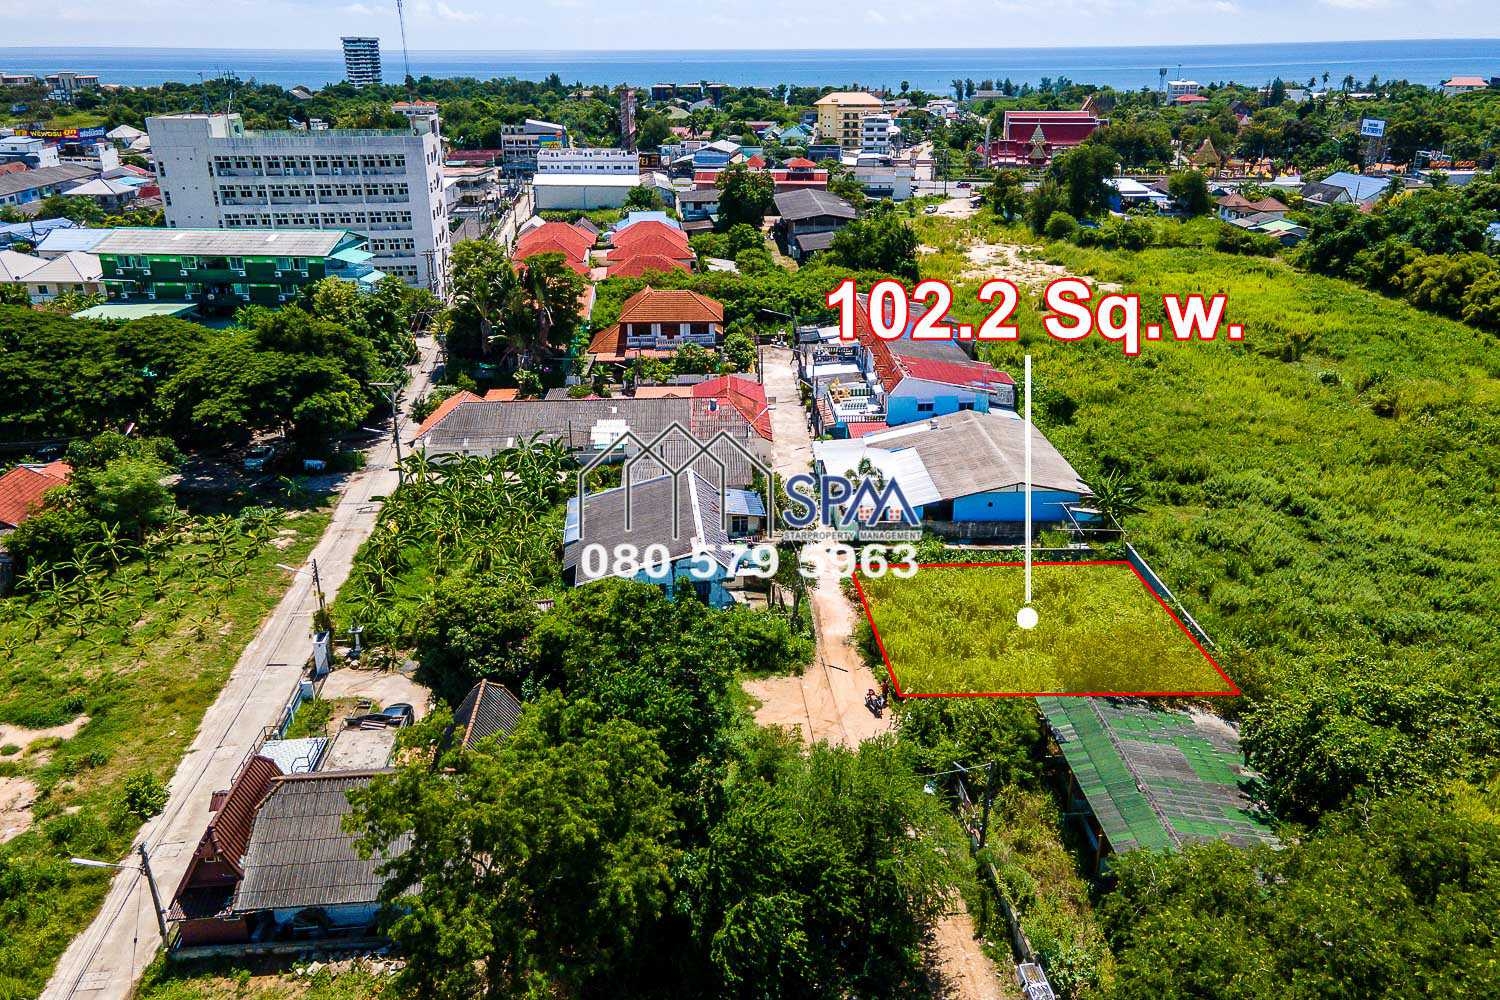 Land in town for sale at Hua Hin Soi 16, Land Area 102.2 sq.wah (408.8 sq.m) Price 20,000 Baht/sq.wah